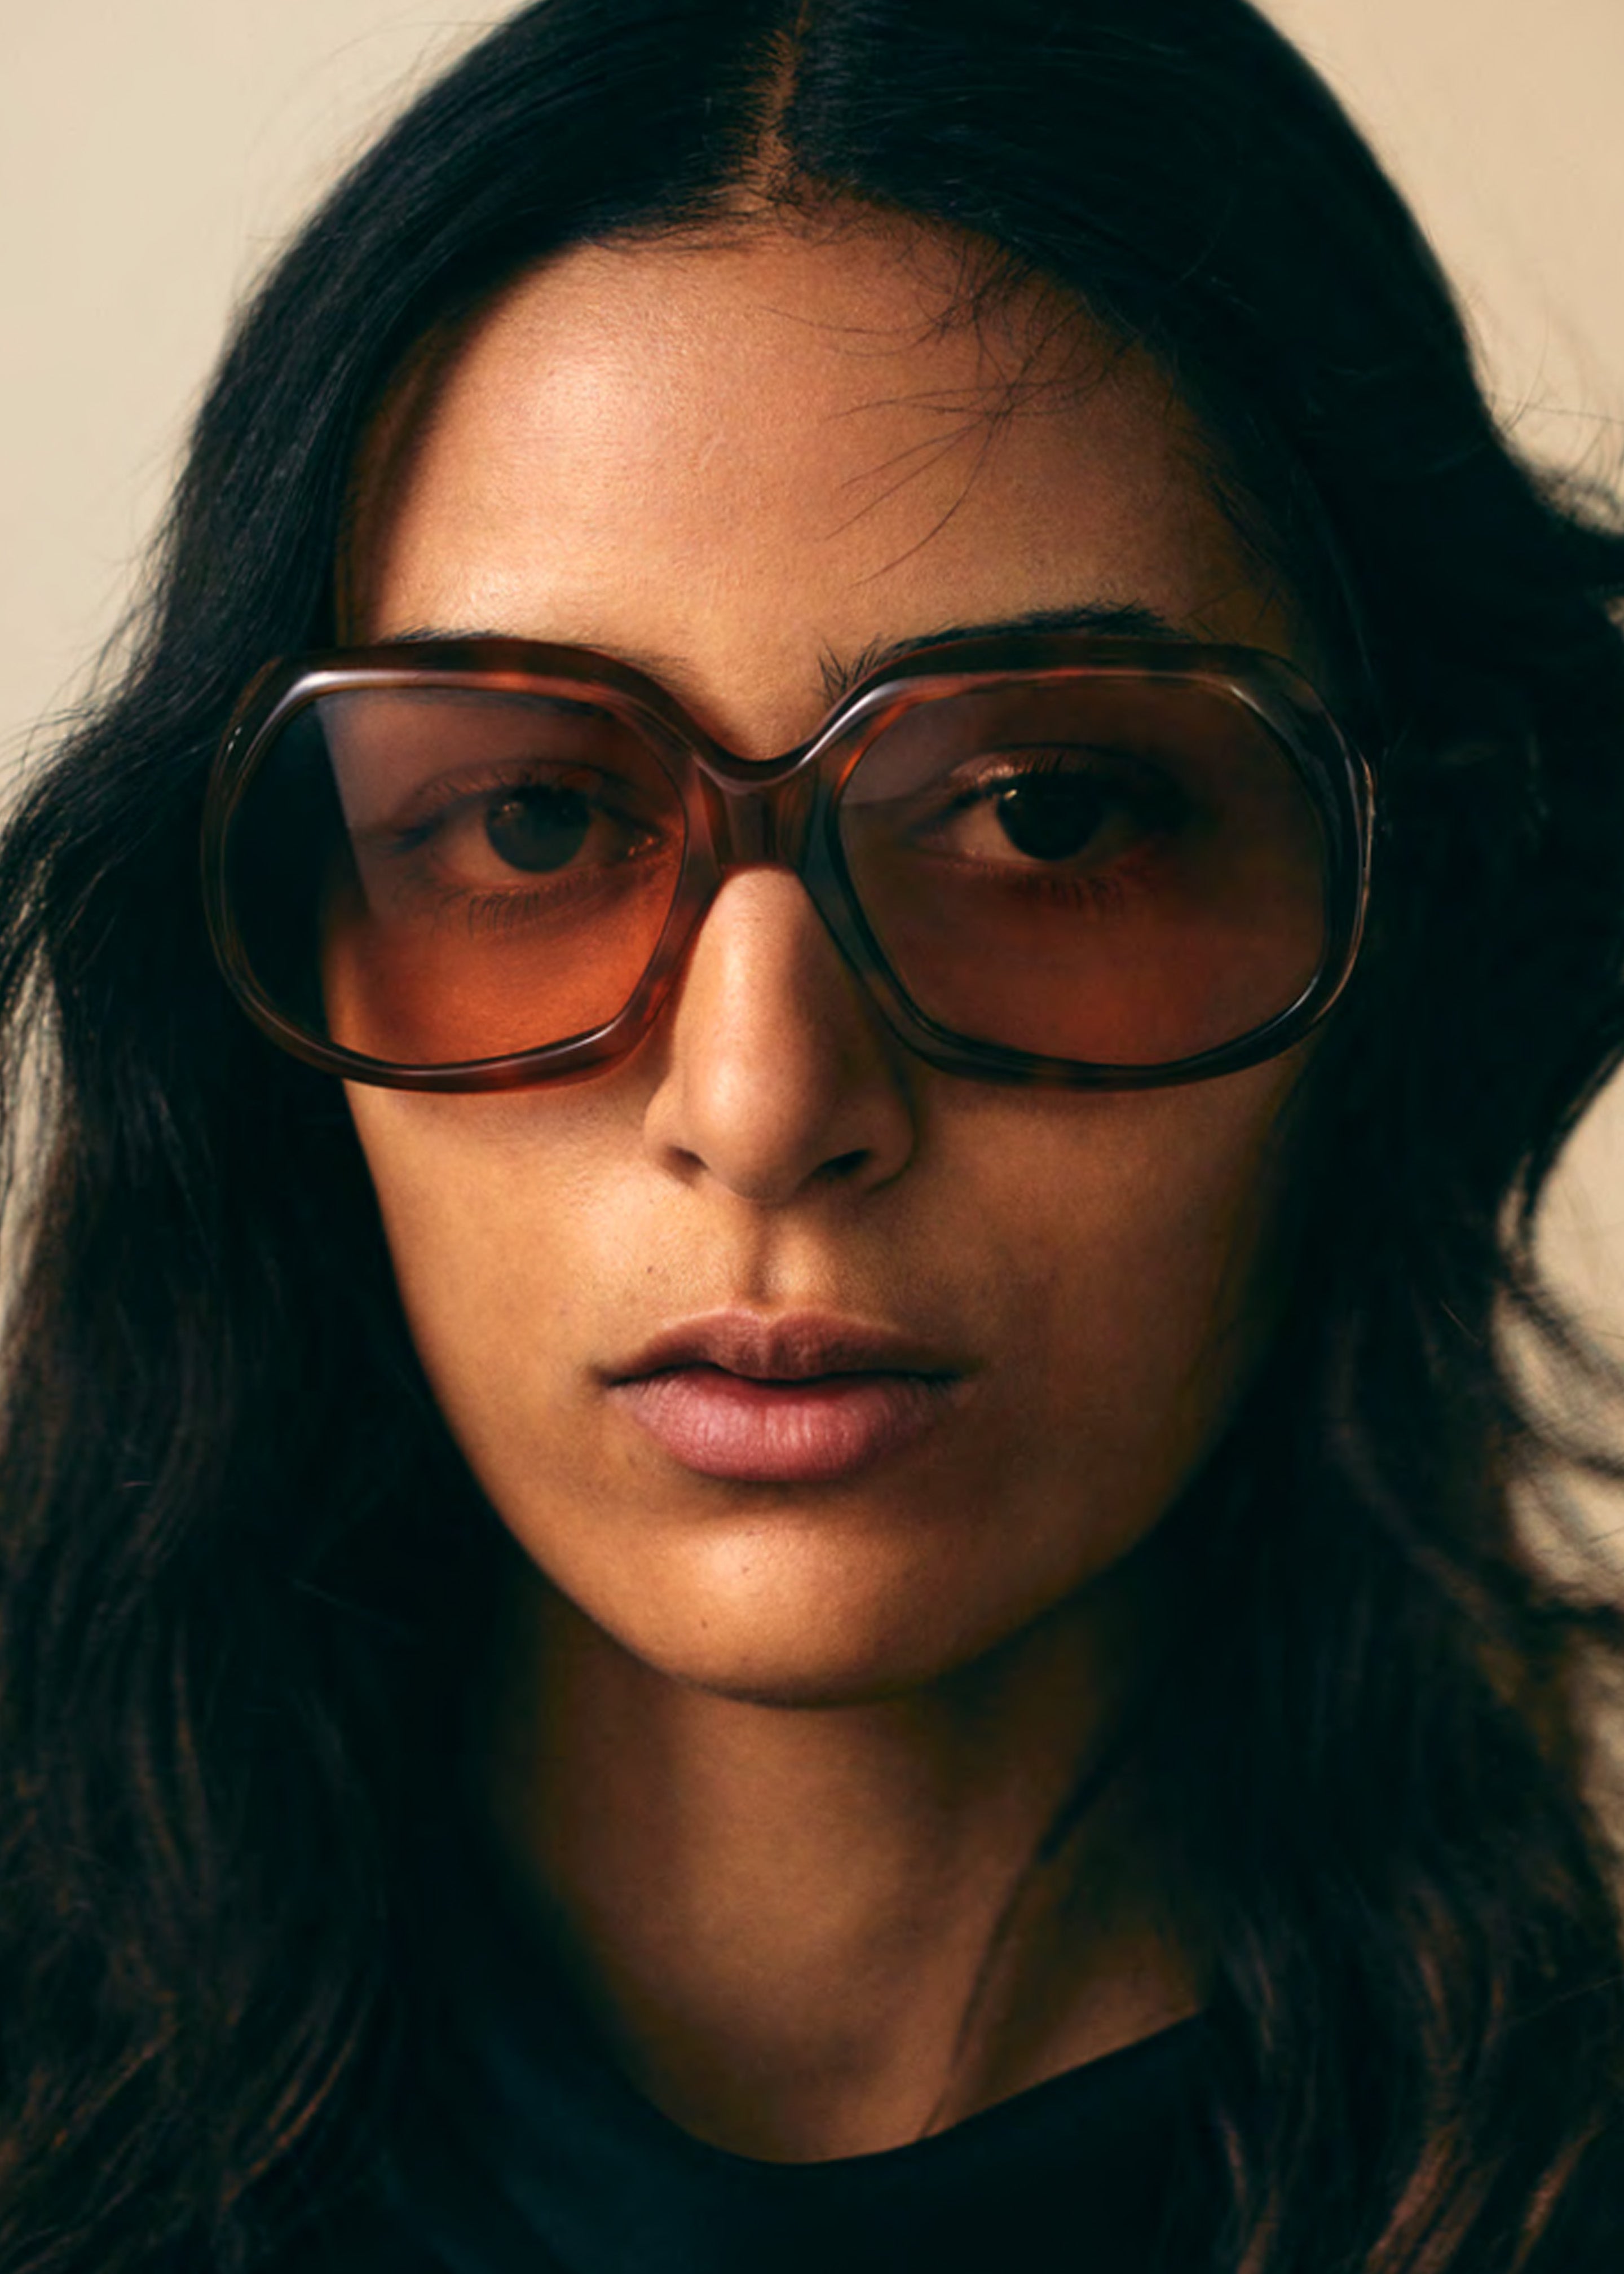 Port Tanger Yamina Sunglasses - Oliban Acetate Amber Lens - 1